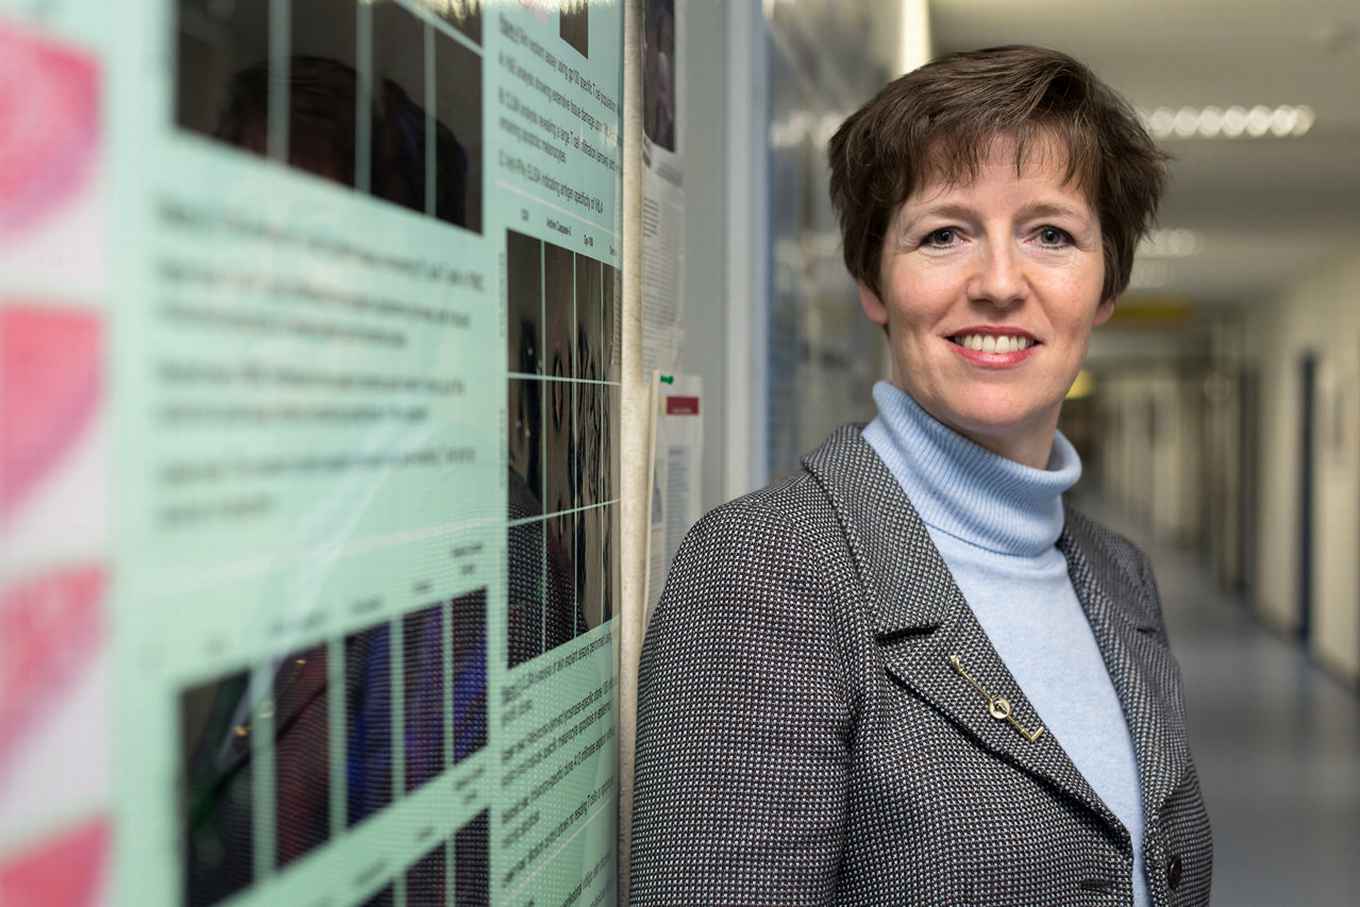 Mw. prof. dr. Rosalie Luiten, professor AMC, Experimentele Dermatologie